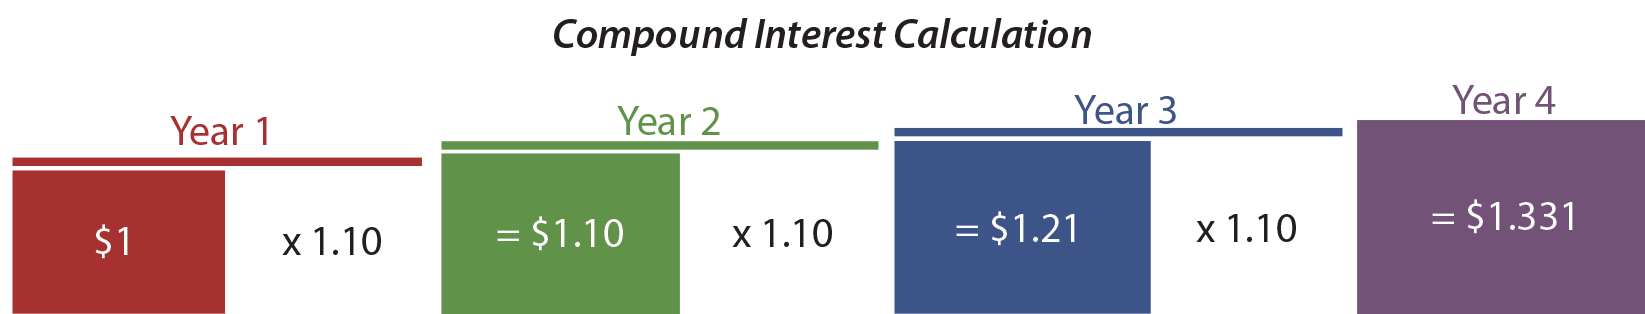 Compound Interest Calculation Illustration